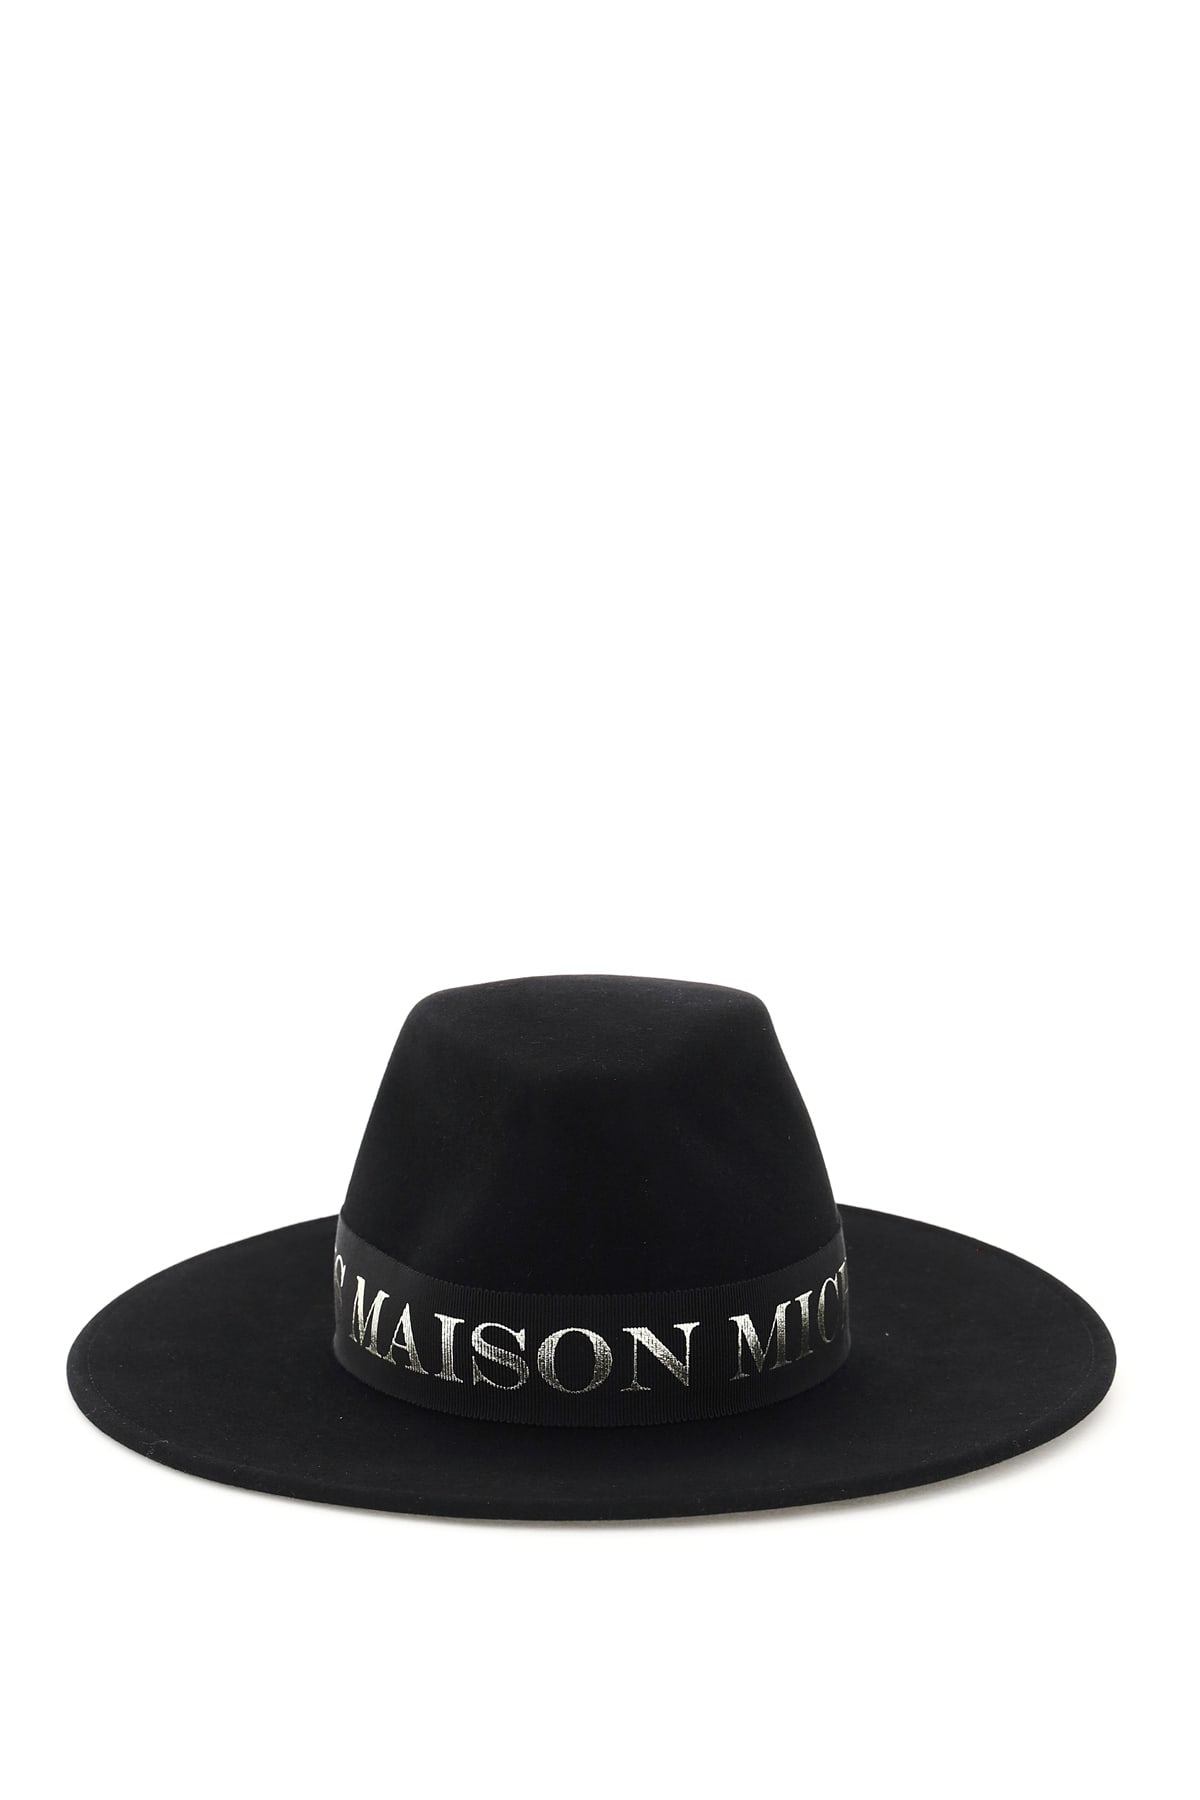 Maison Michel Kyra Platinum Logo Hat